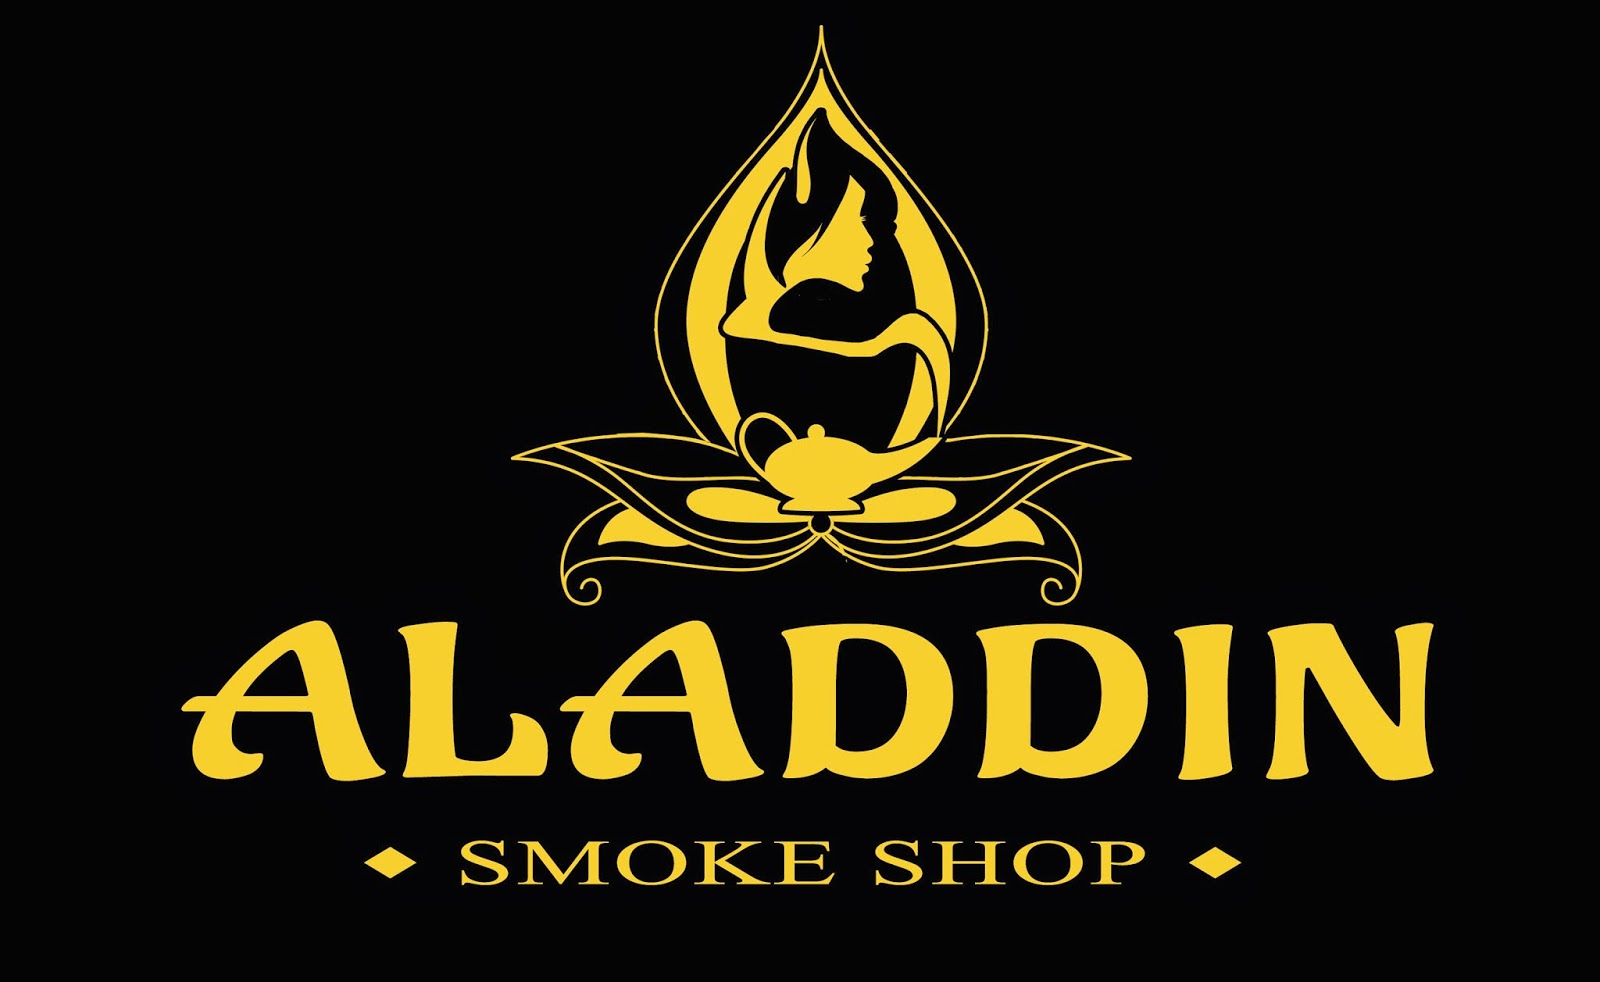 Photo of Aladdin Glass & Vape - Lodi in Lodi City, New Jersey, United States - 1 Picture of Point of interest, Establishment, Store